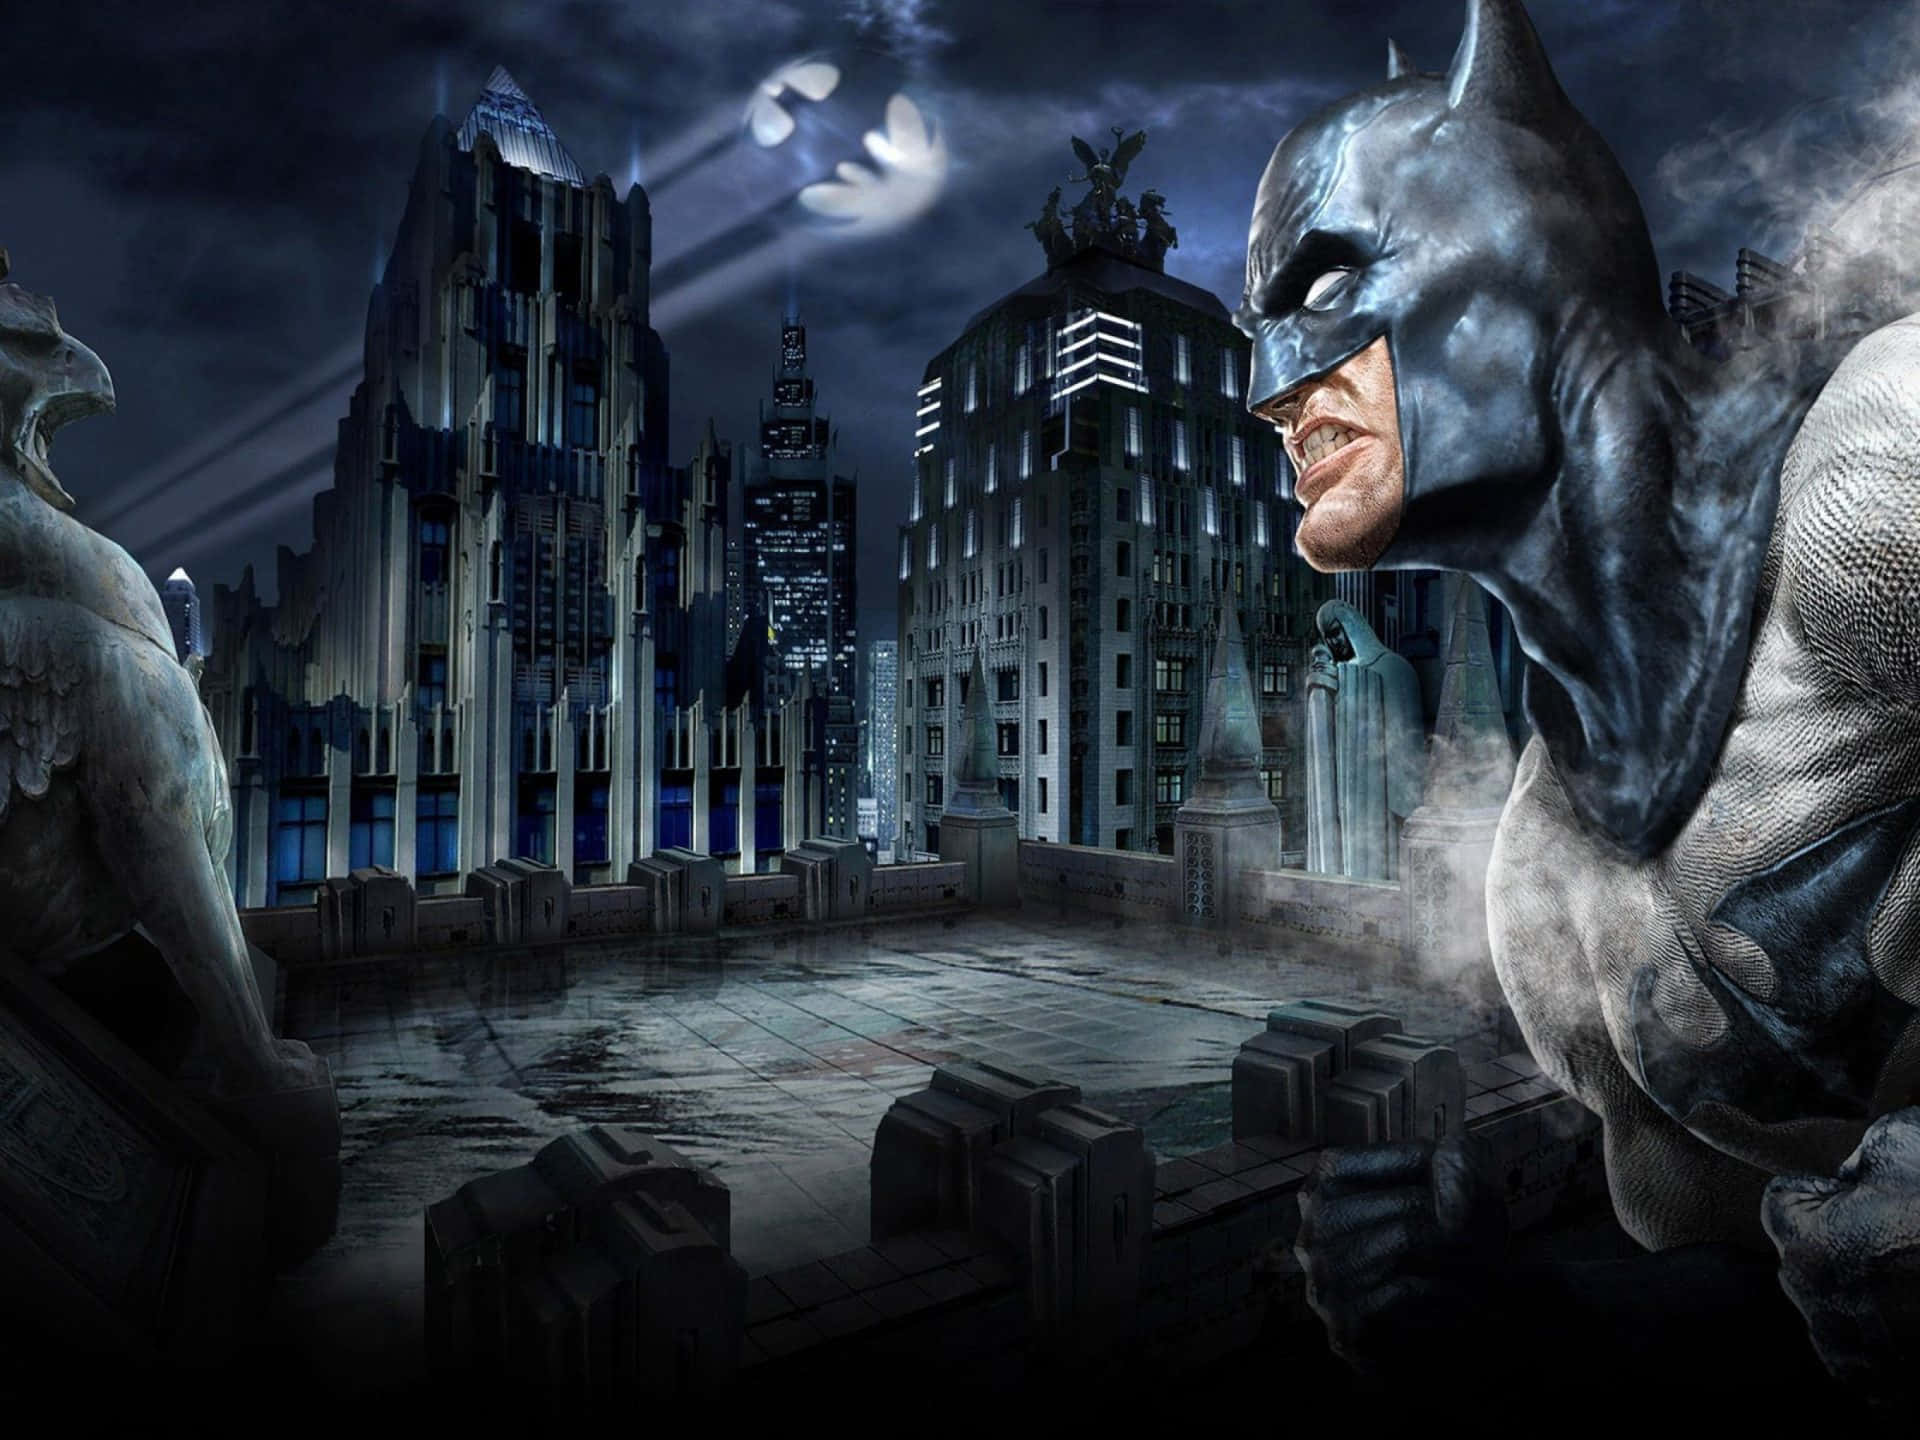 The Dark Knight Returns - Batman in Action Wallpaper